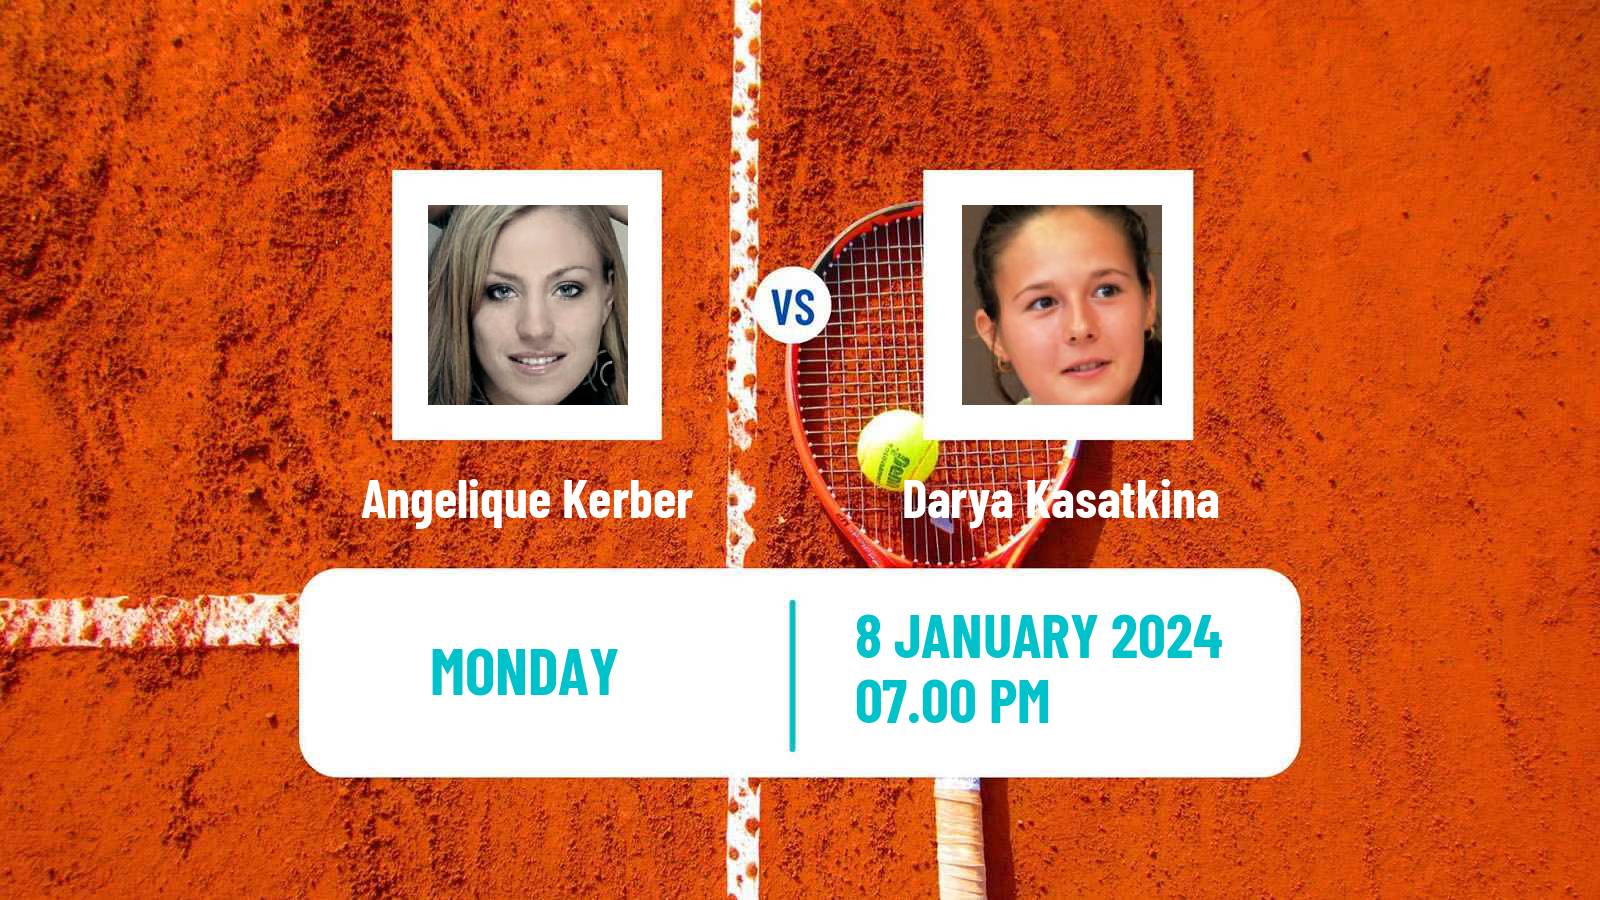 Tennis WTA Adelaide Angelique Kerber - Darya Kasatkina